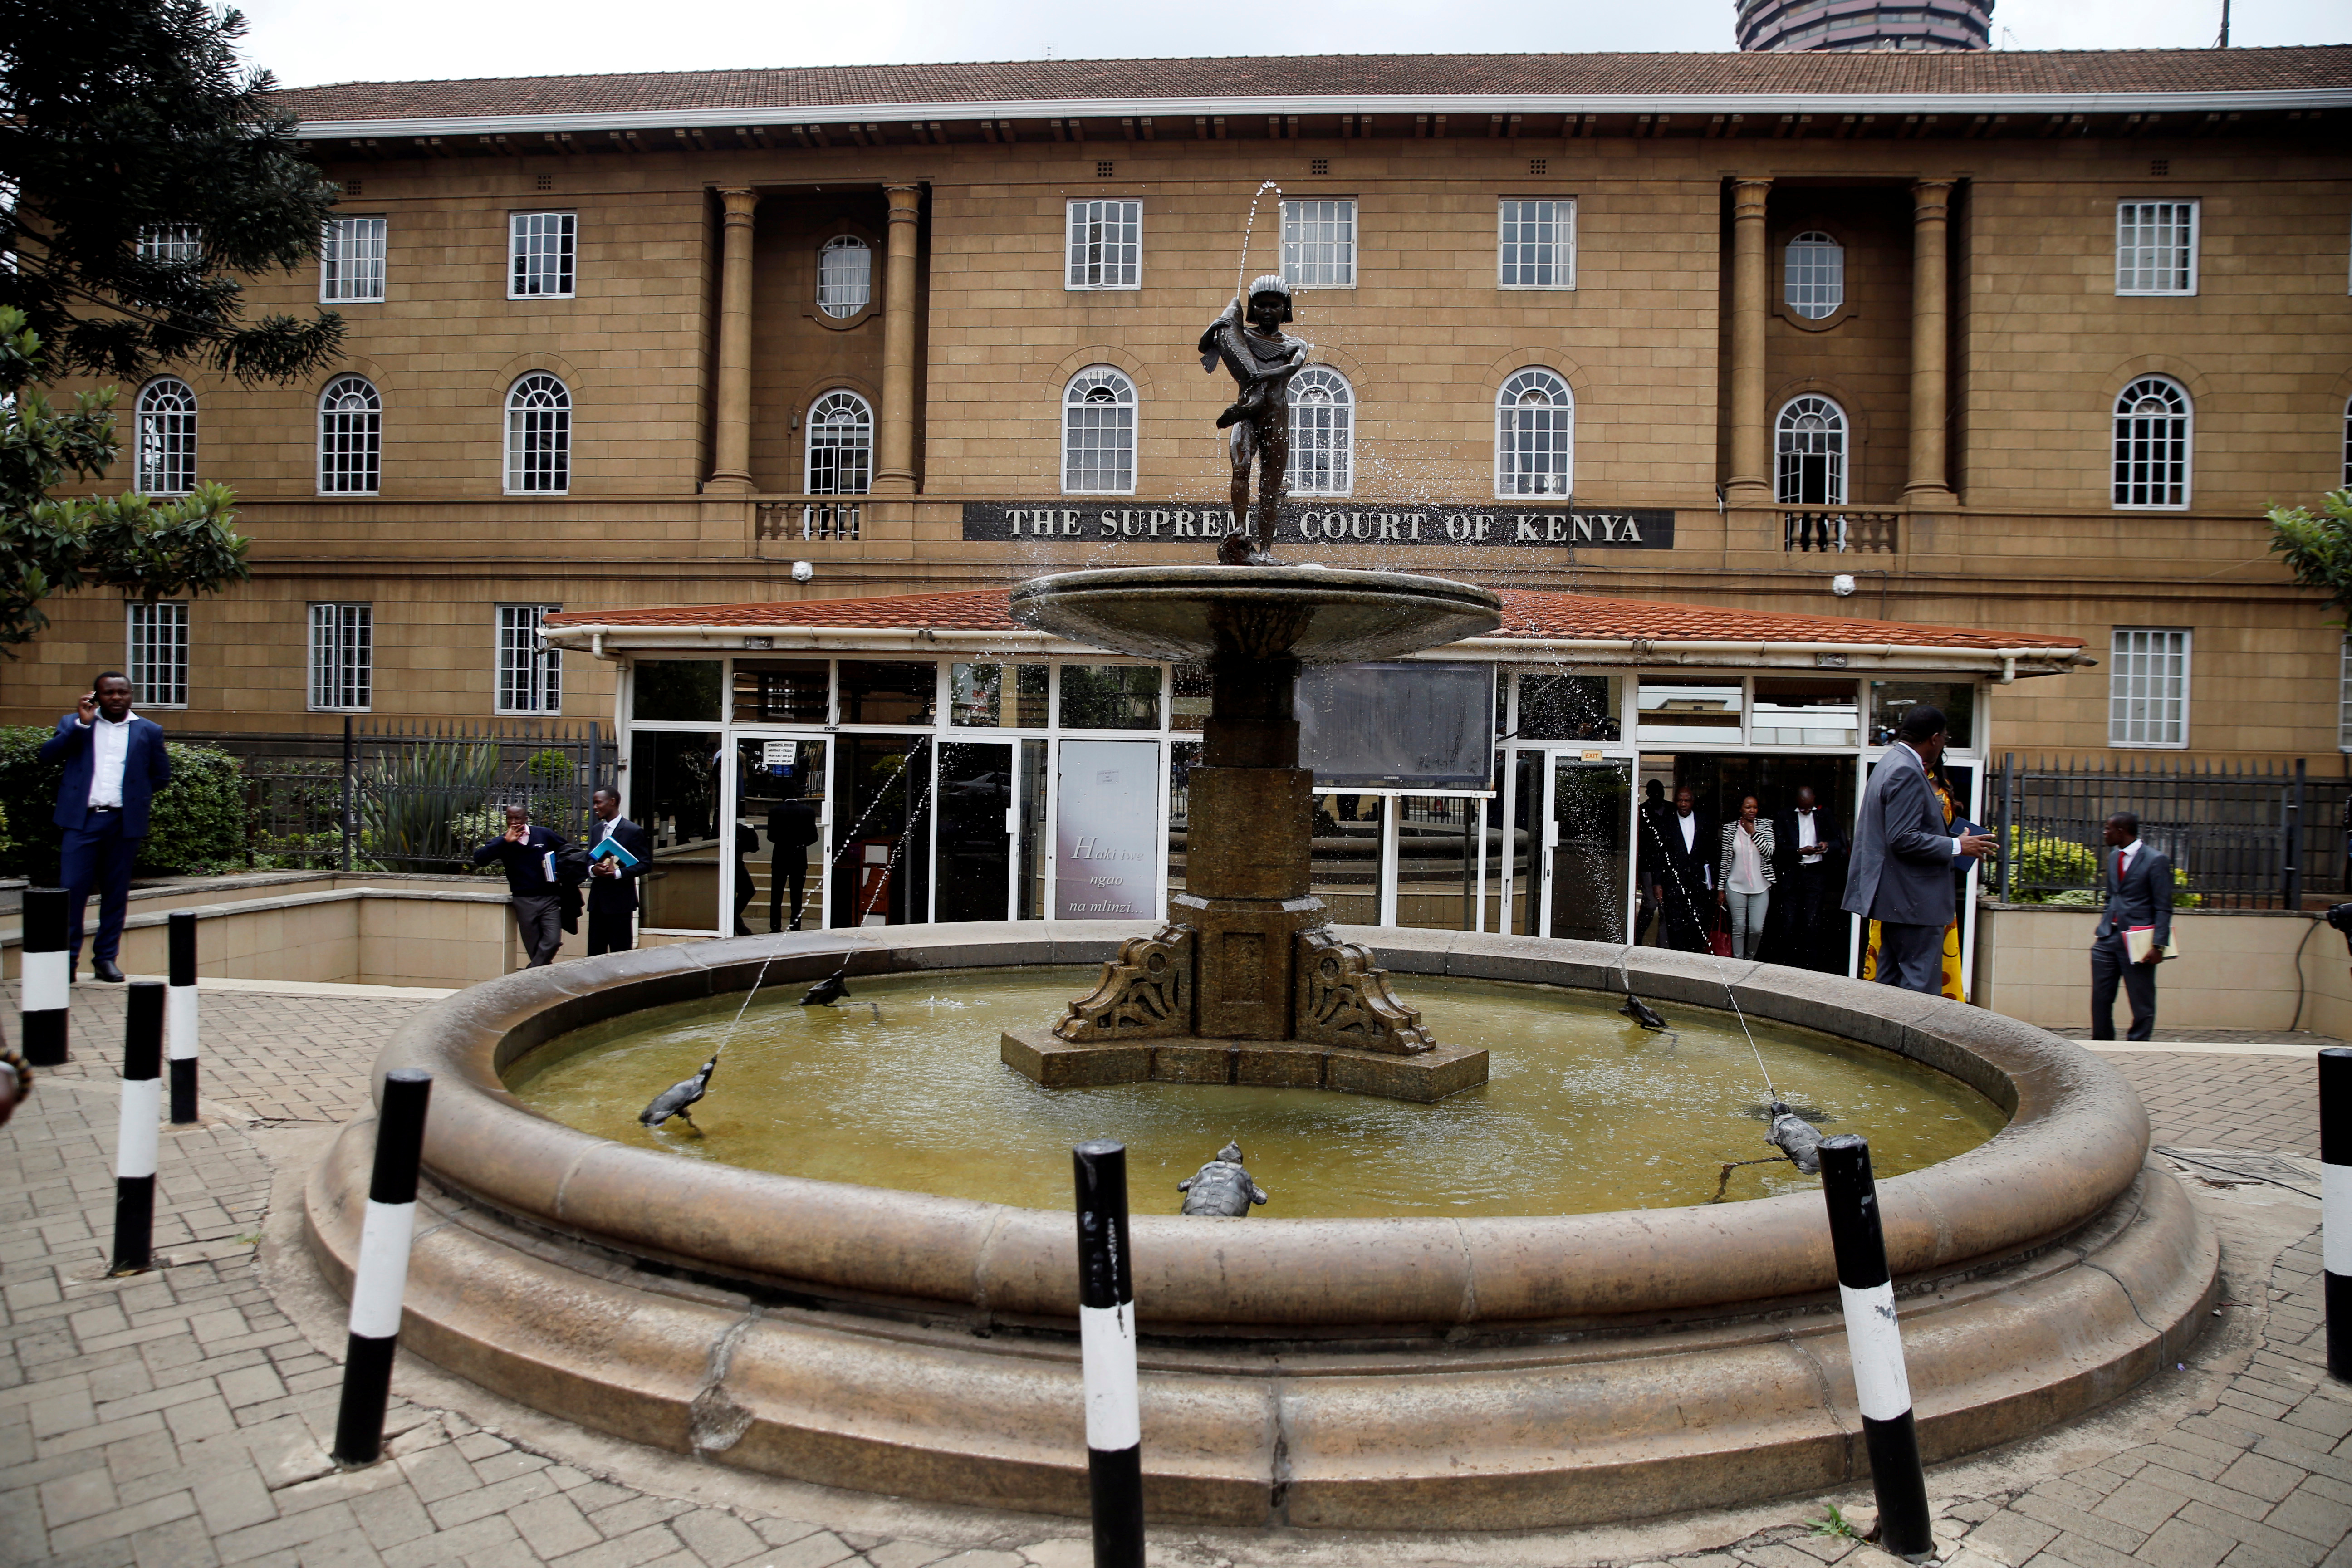 The Supreme Court Building – Supreme Court of Kenya